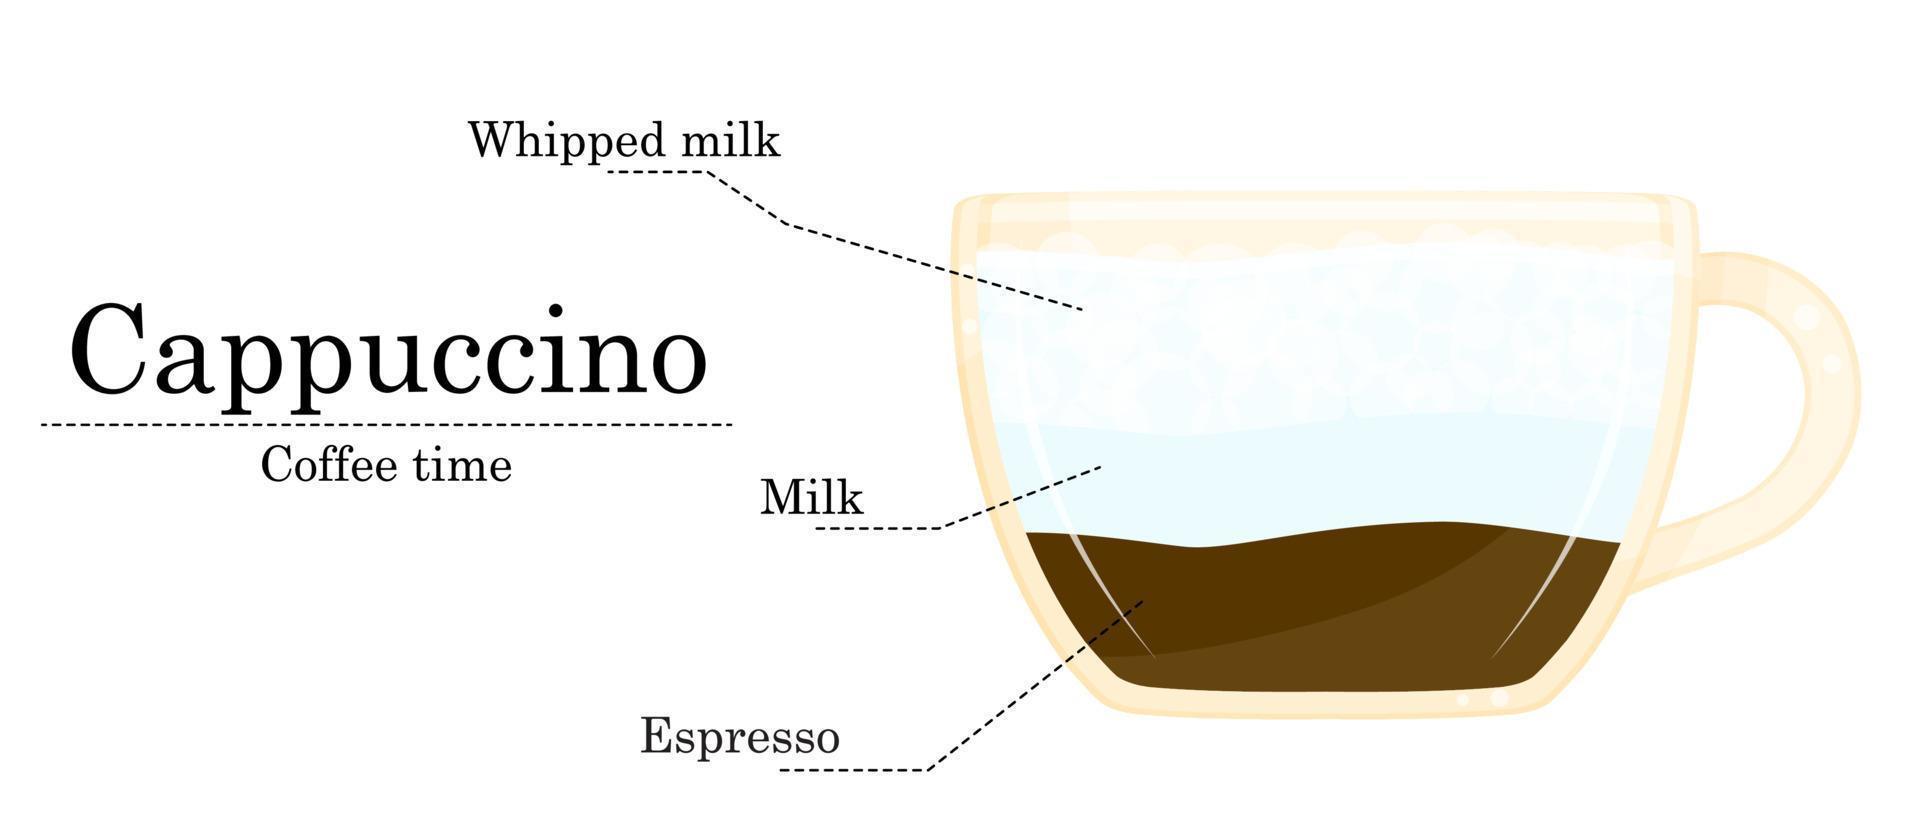 vector ilustración de café receta, capuchino receta, café tienda ilustración